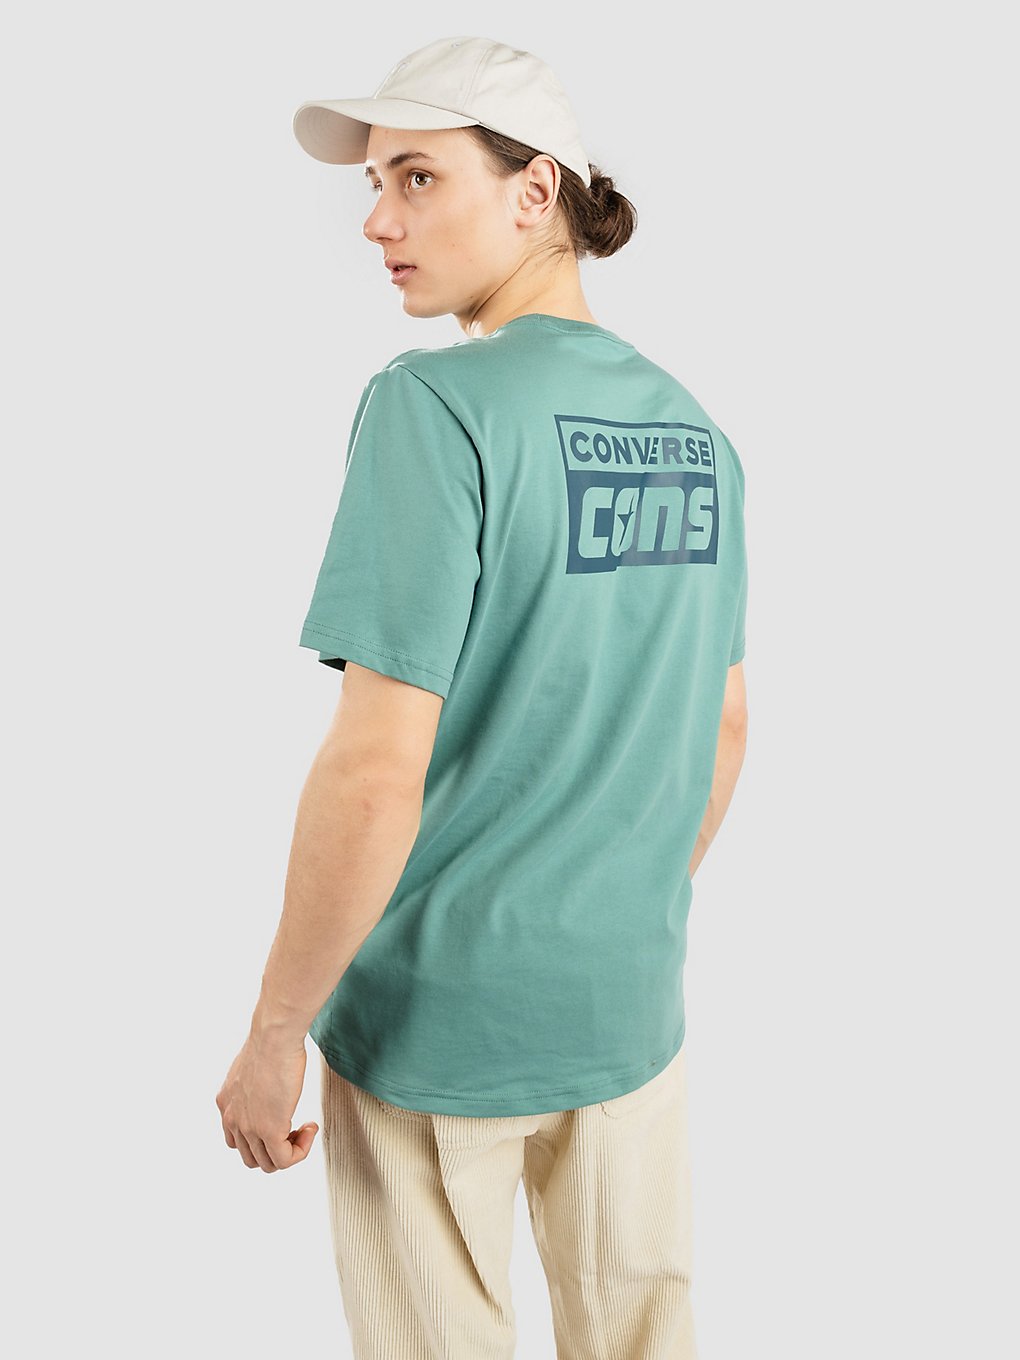 Converse Cons T-Shirt blauw